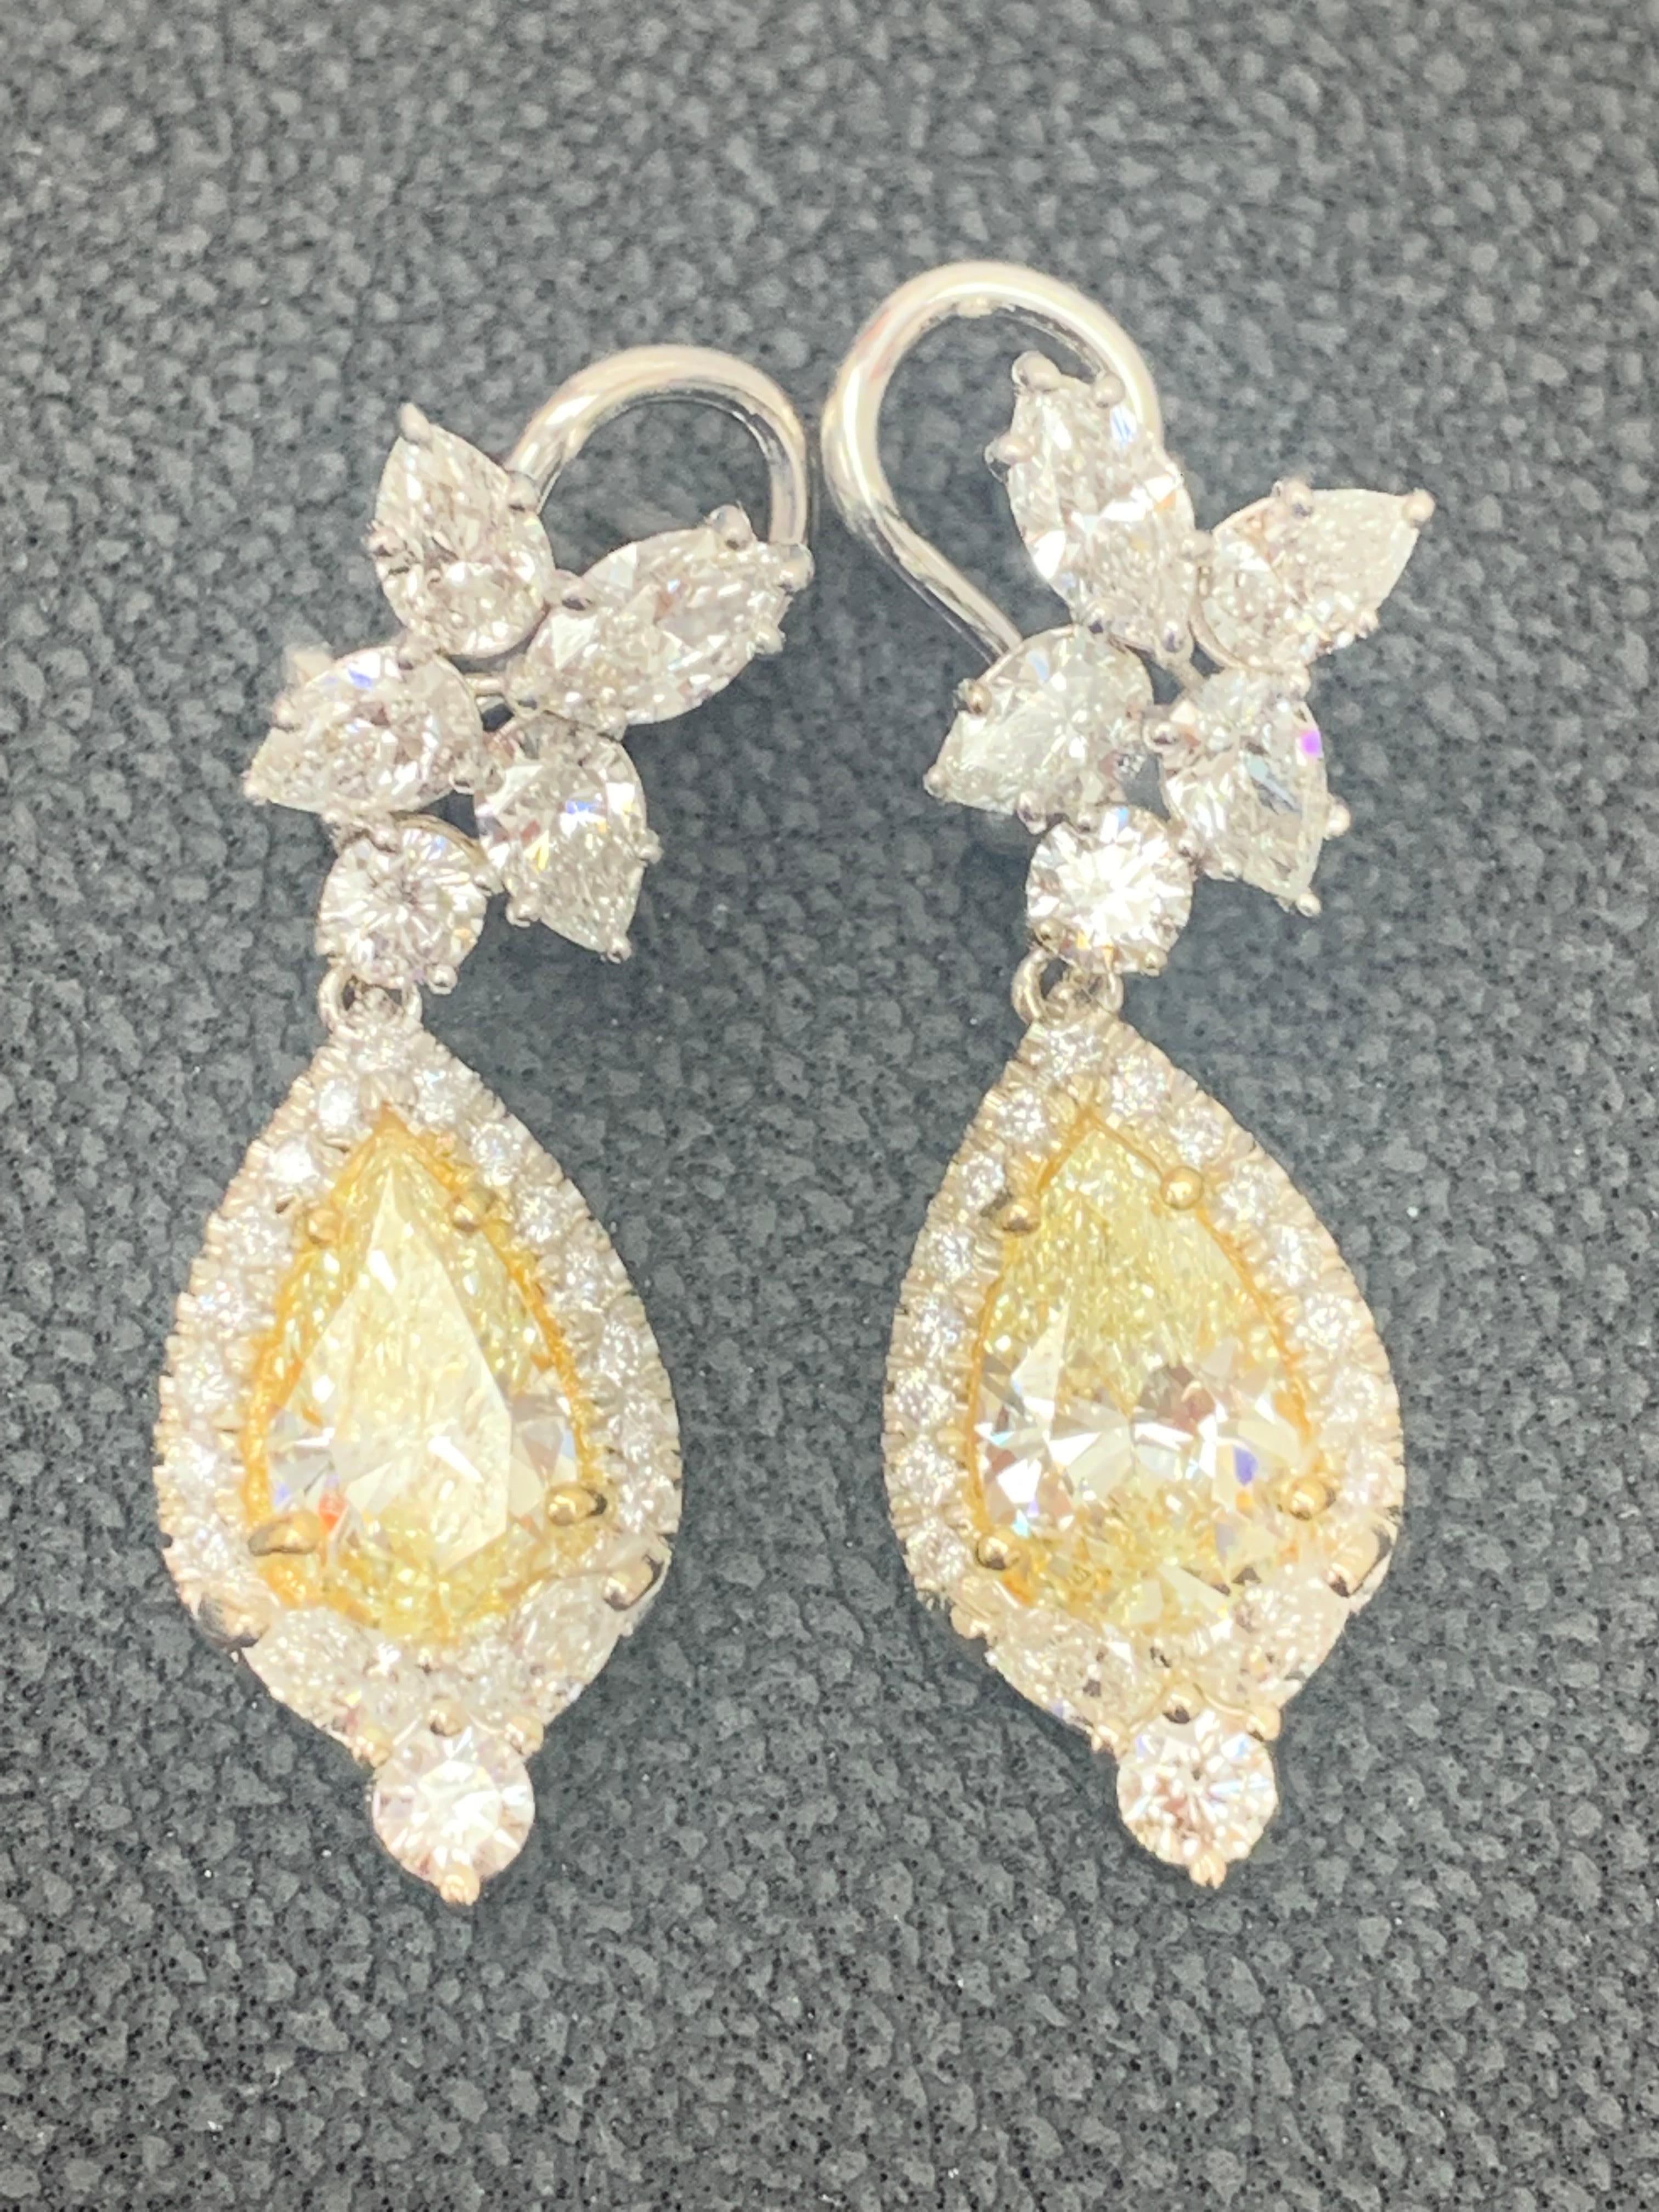 Contemporary CERTIFIED 2.89 Carat Fancy Yellow Diamond Drop Earrings in 18K White Gold For Sale